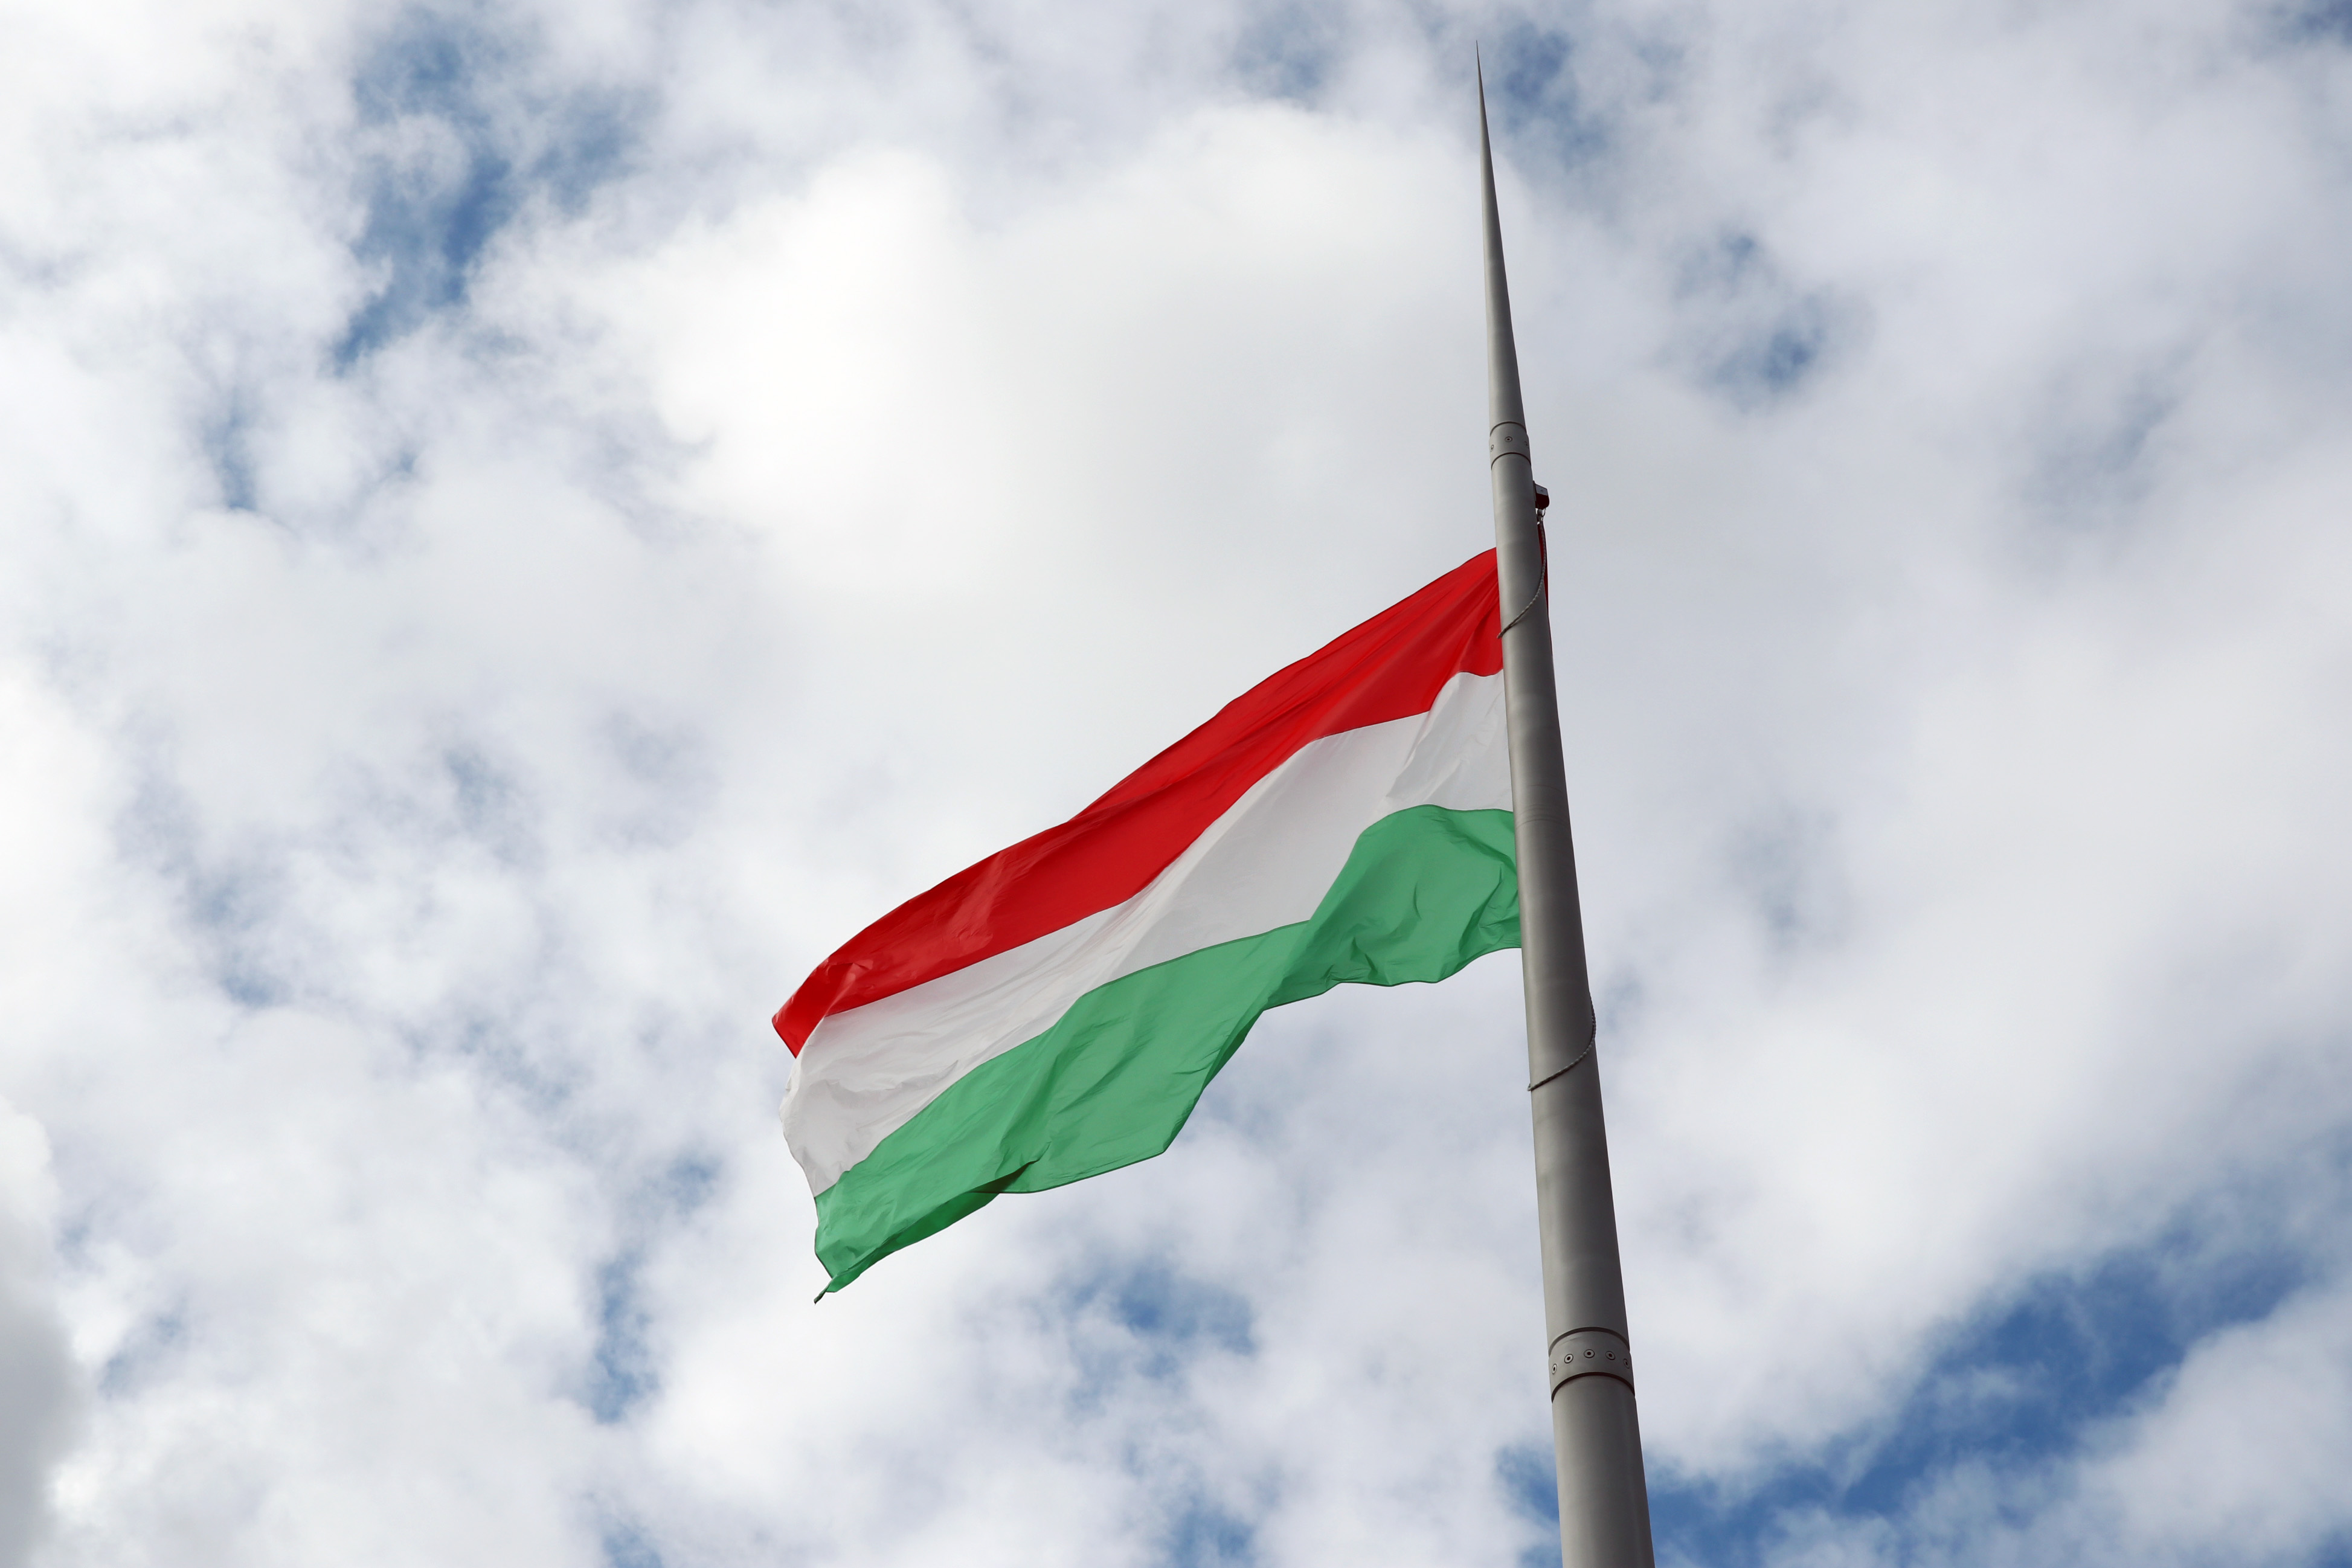 March 15 Hungary National flag hoisted Hungary flag